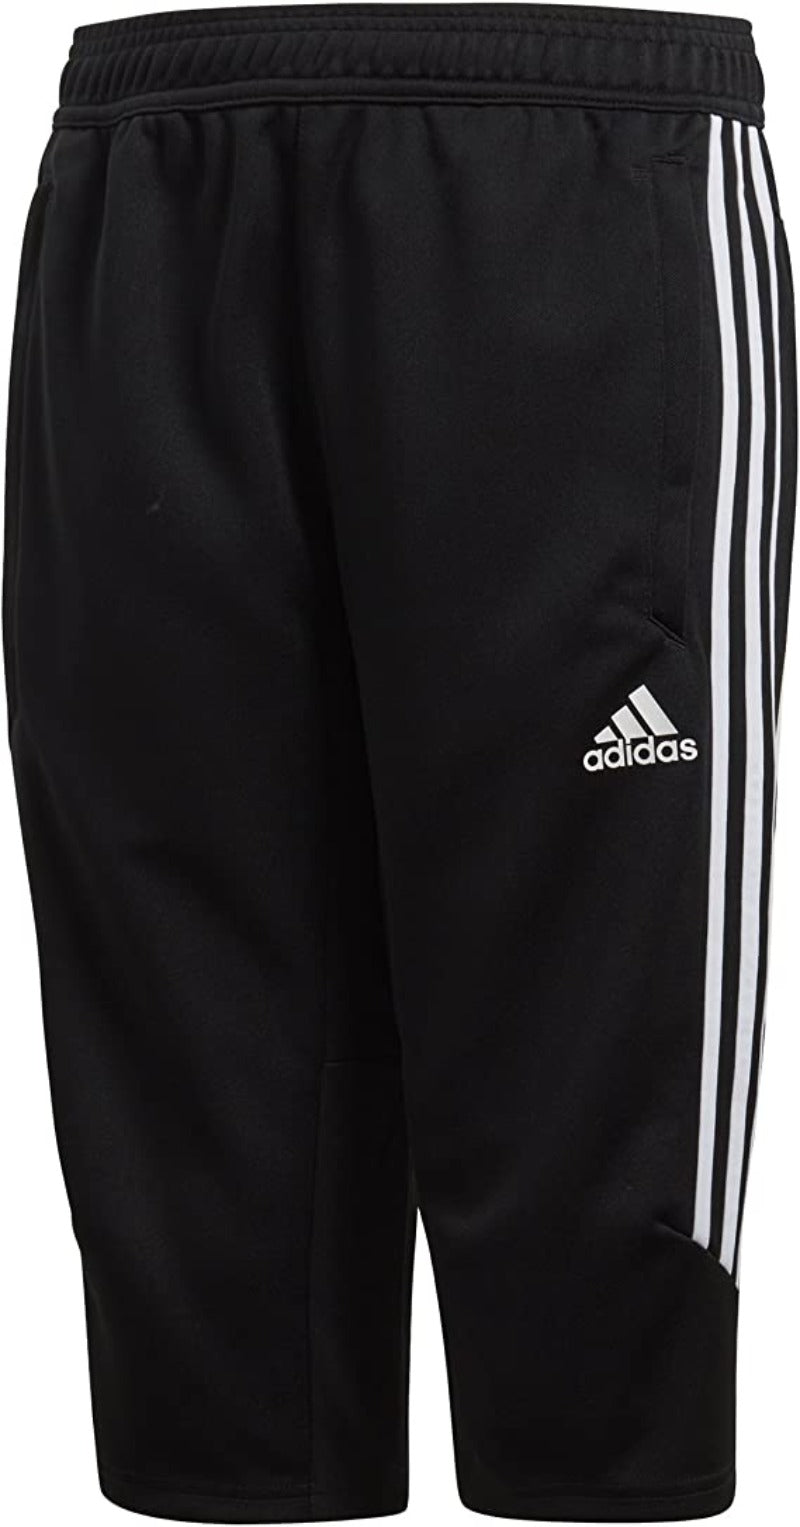 adidas Junior Tiro 17 3/4 Soccer Pants